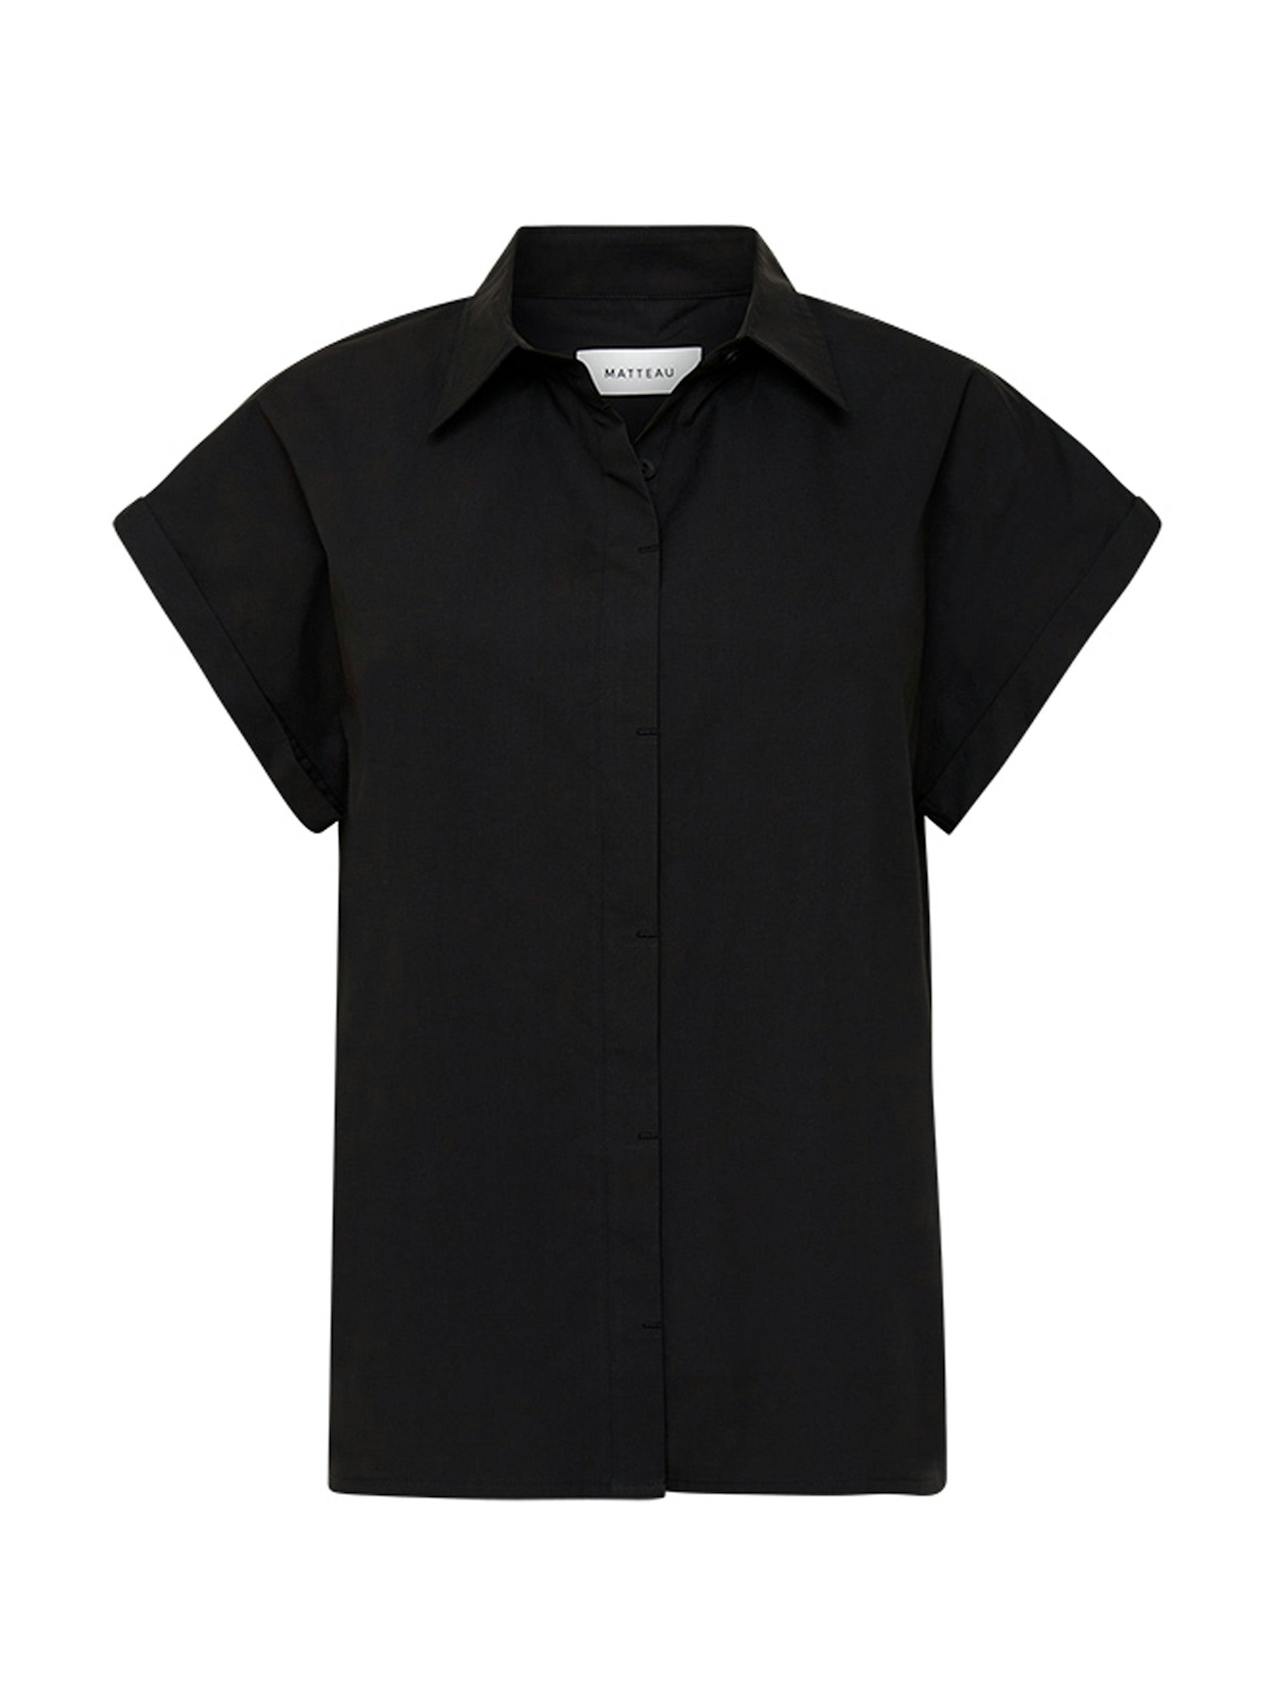 Black cotton relaxed sleeveless shirt